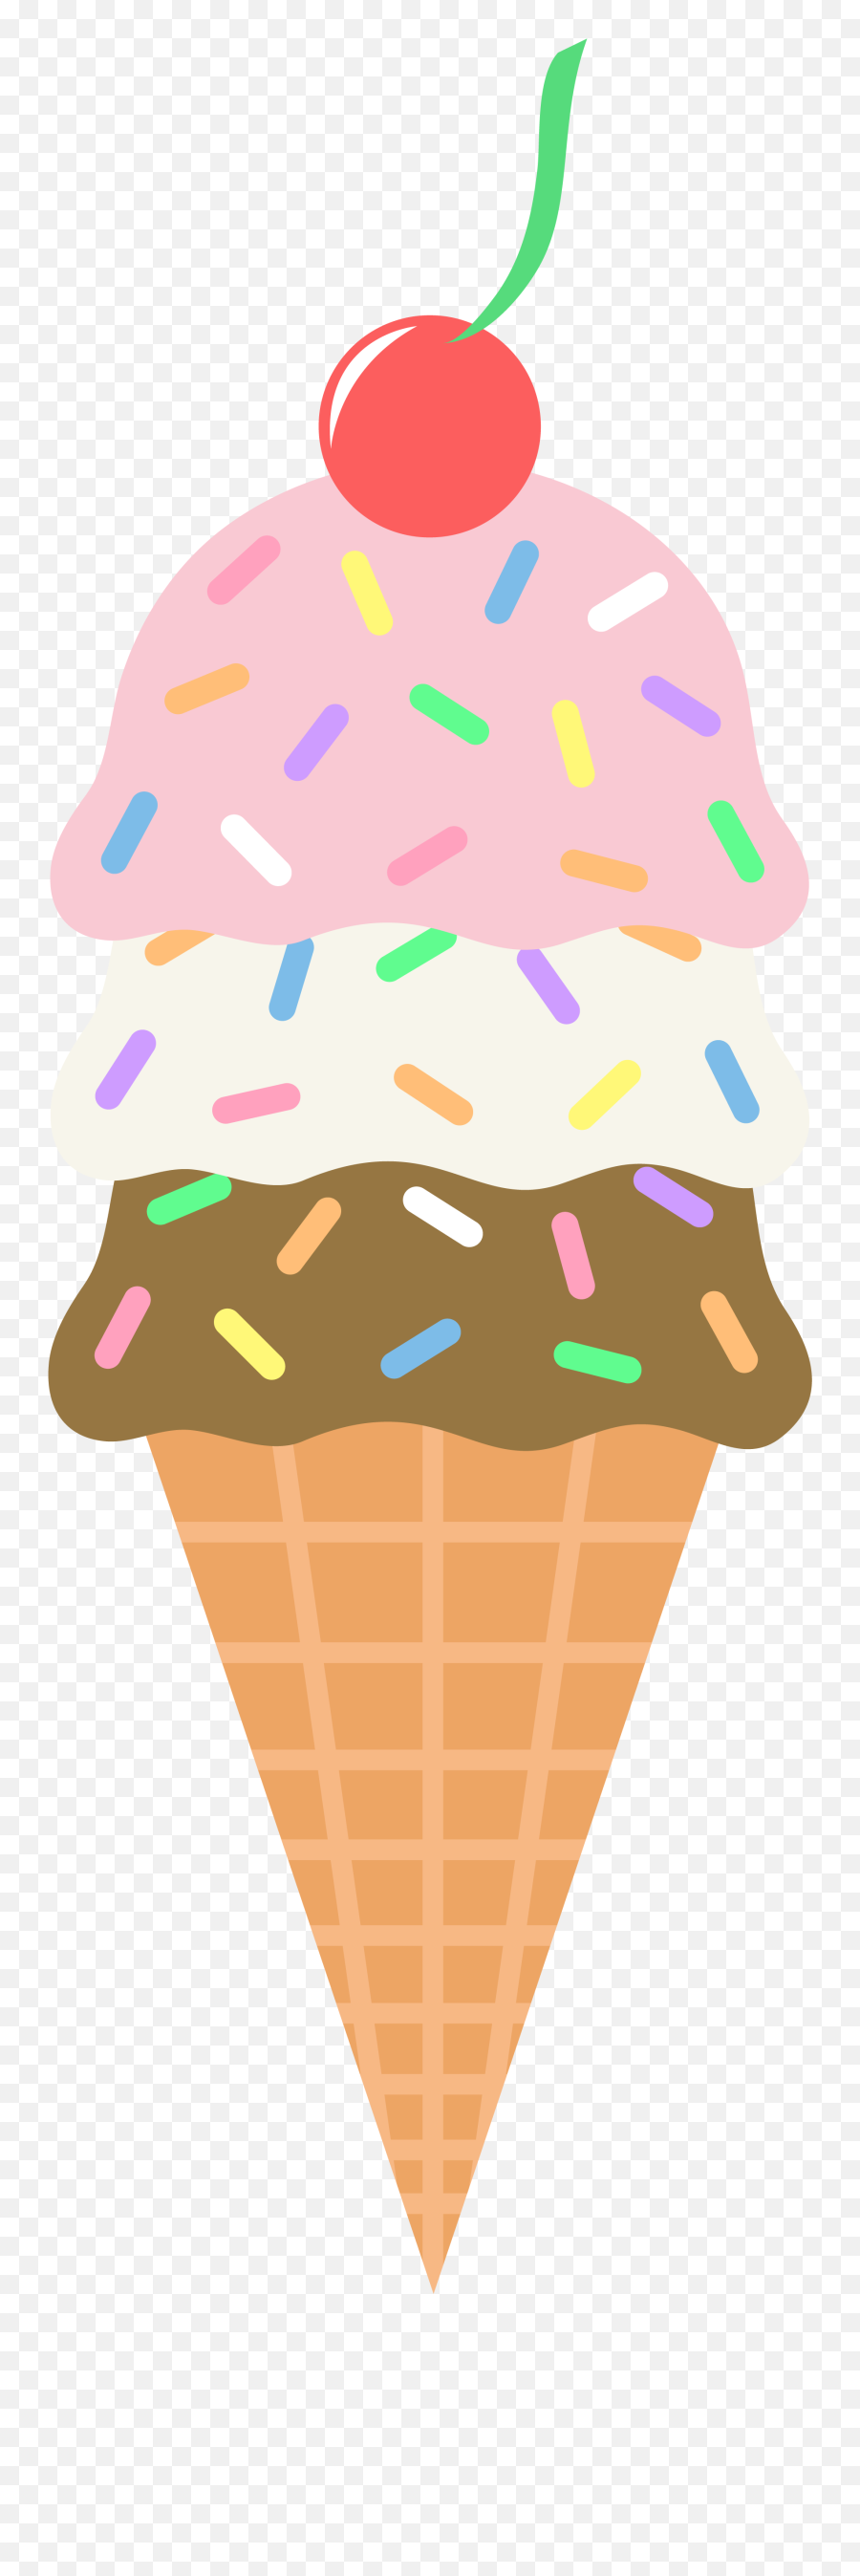 Free Pictures Of An Ice Cream Cone Download Free Clip Art - Transparent Background Ice Cream Clipart Emoji,Ice Cream Cone Emoji